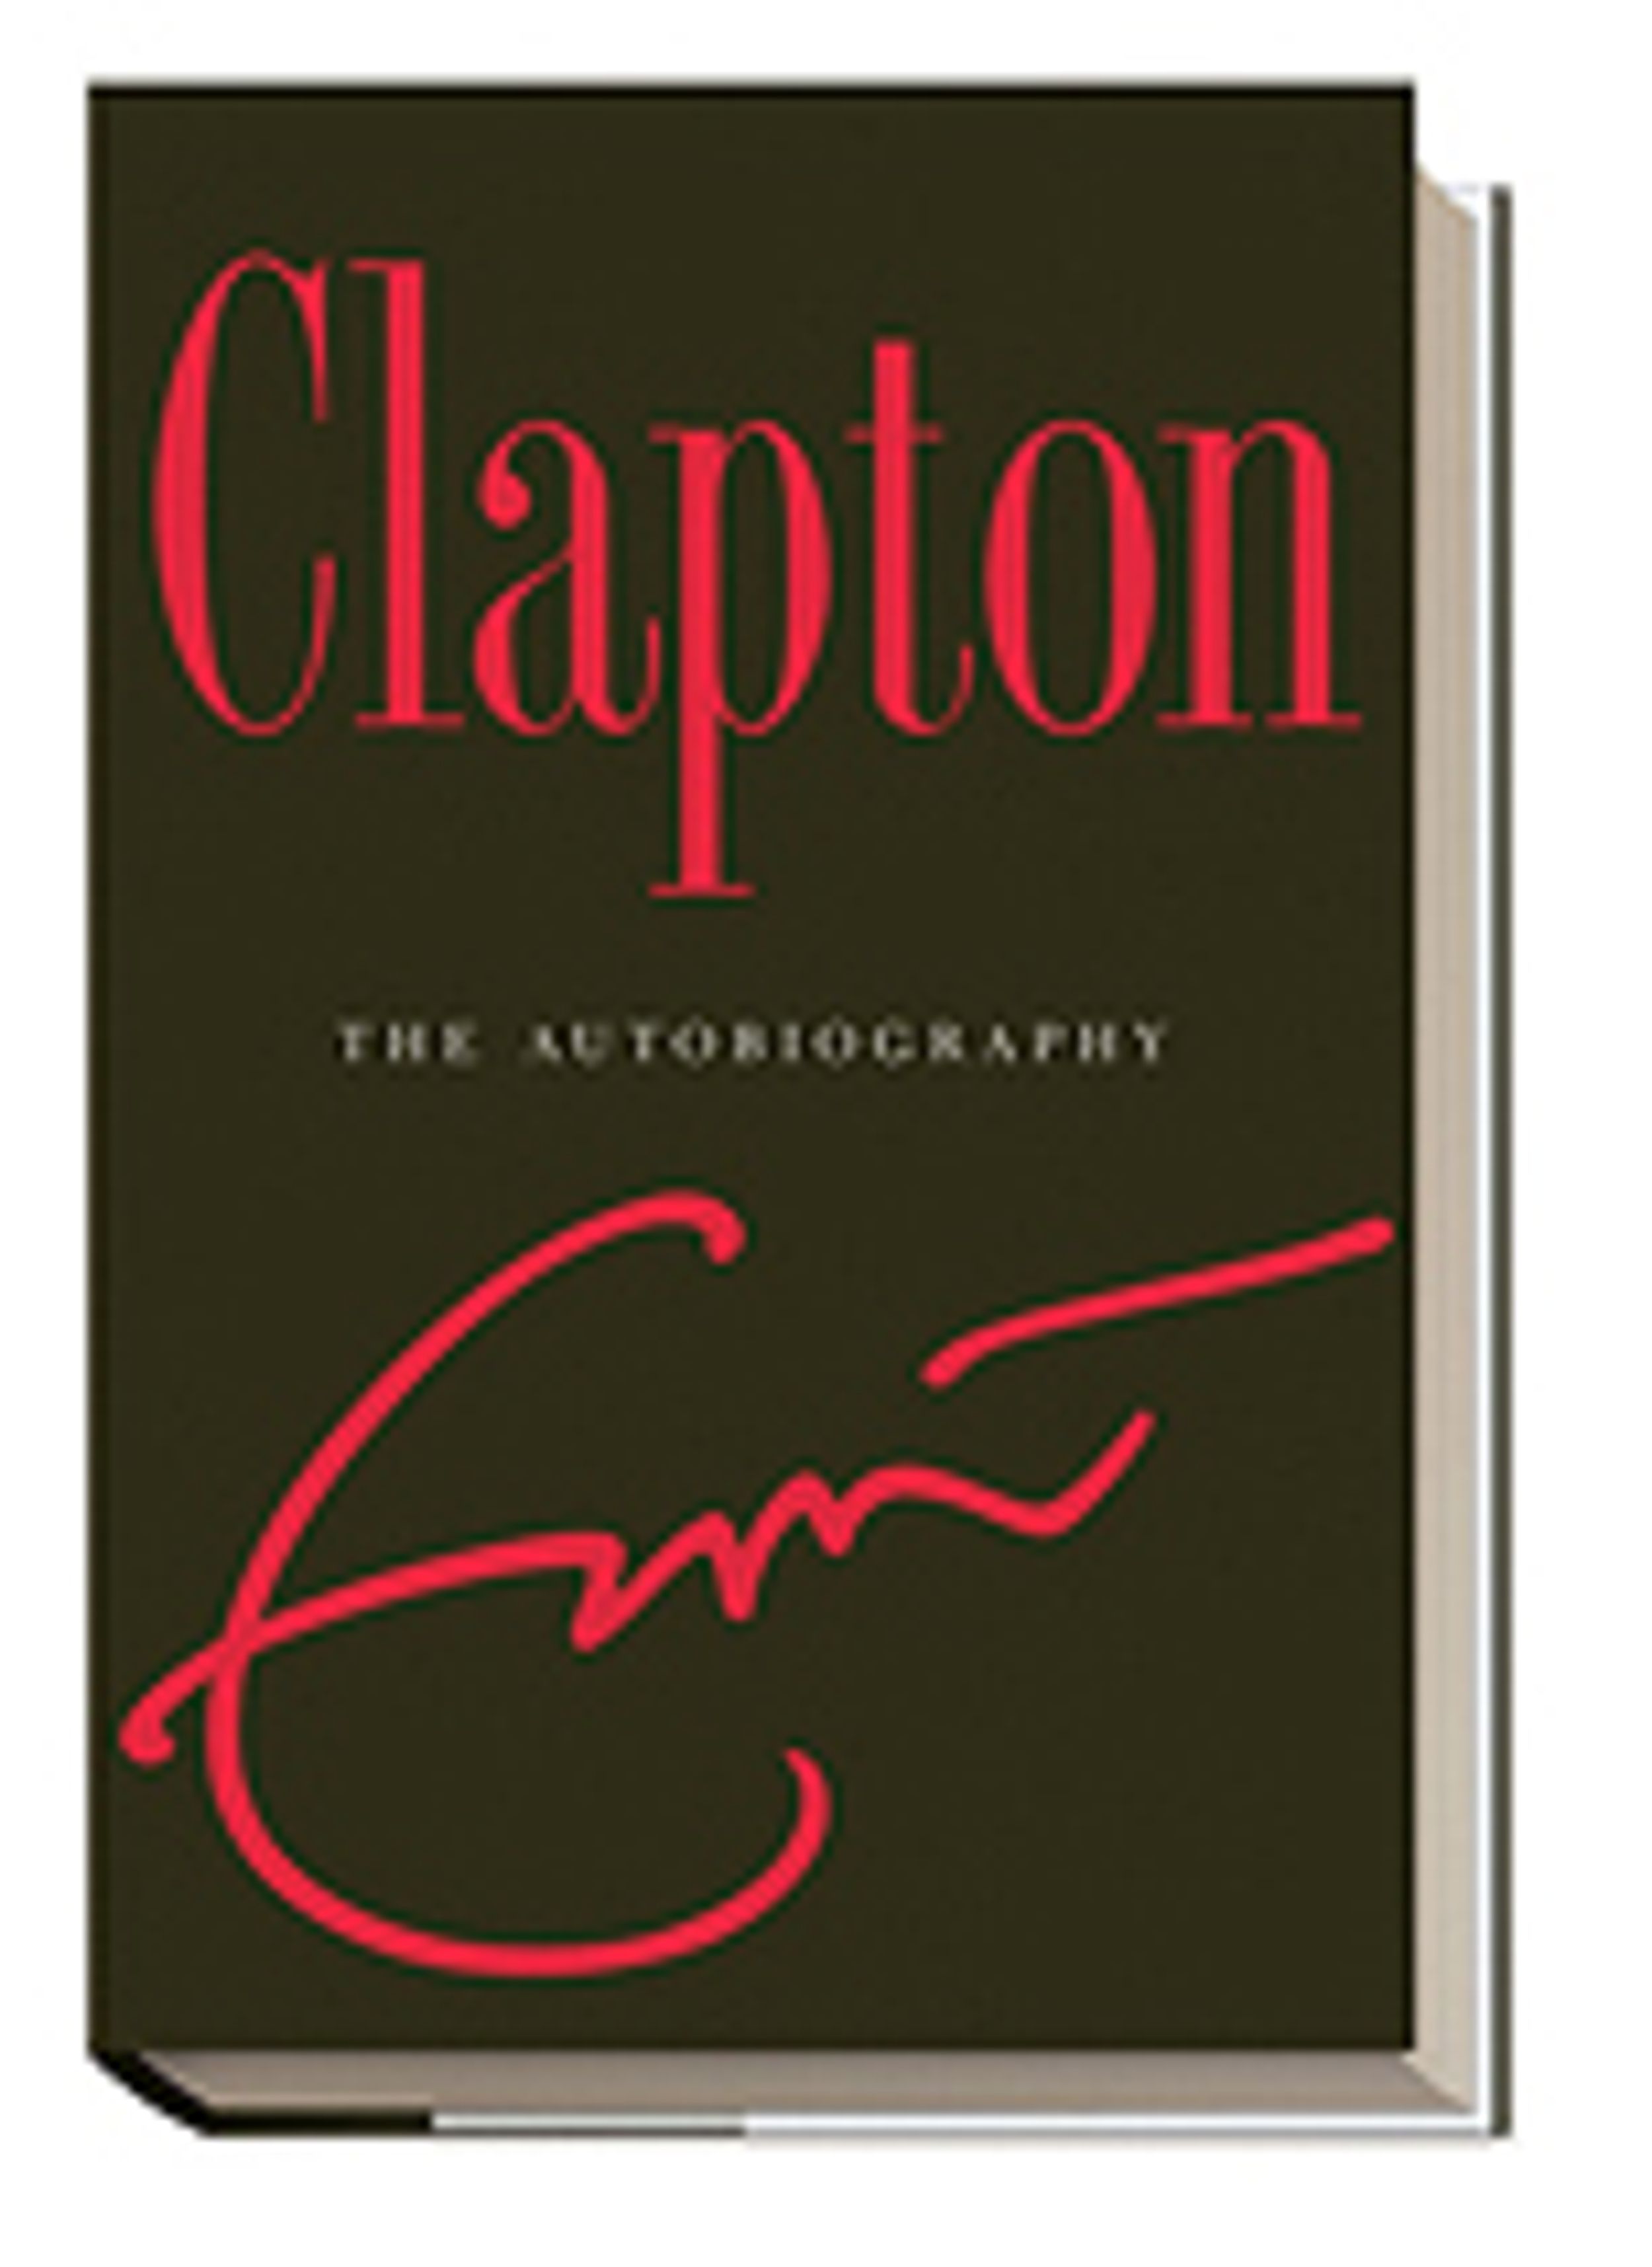 New Clapton Book, Double-Disc Set